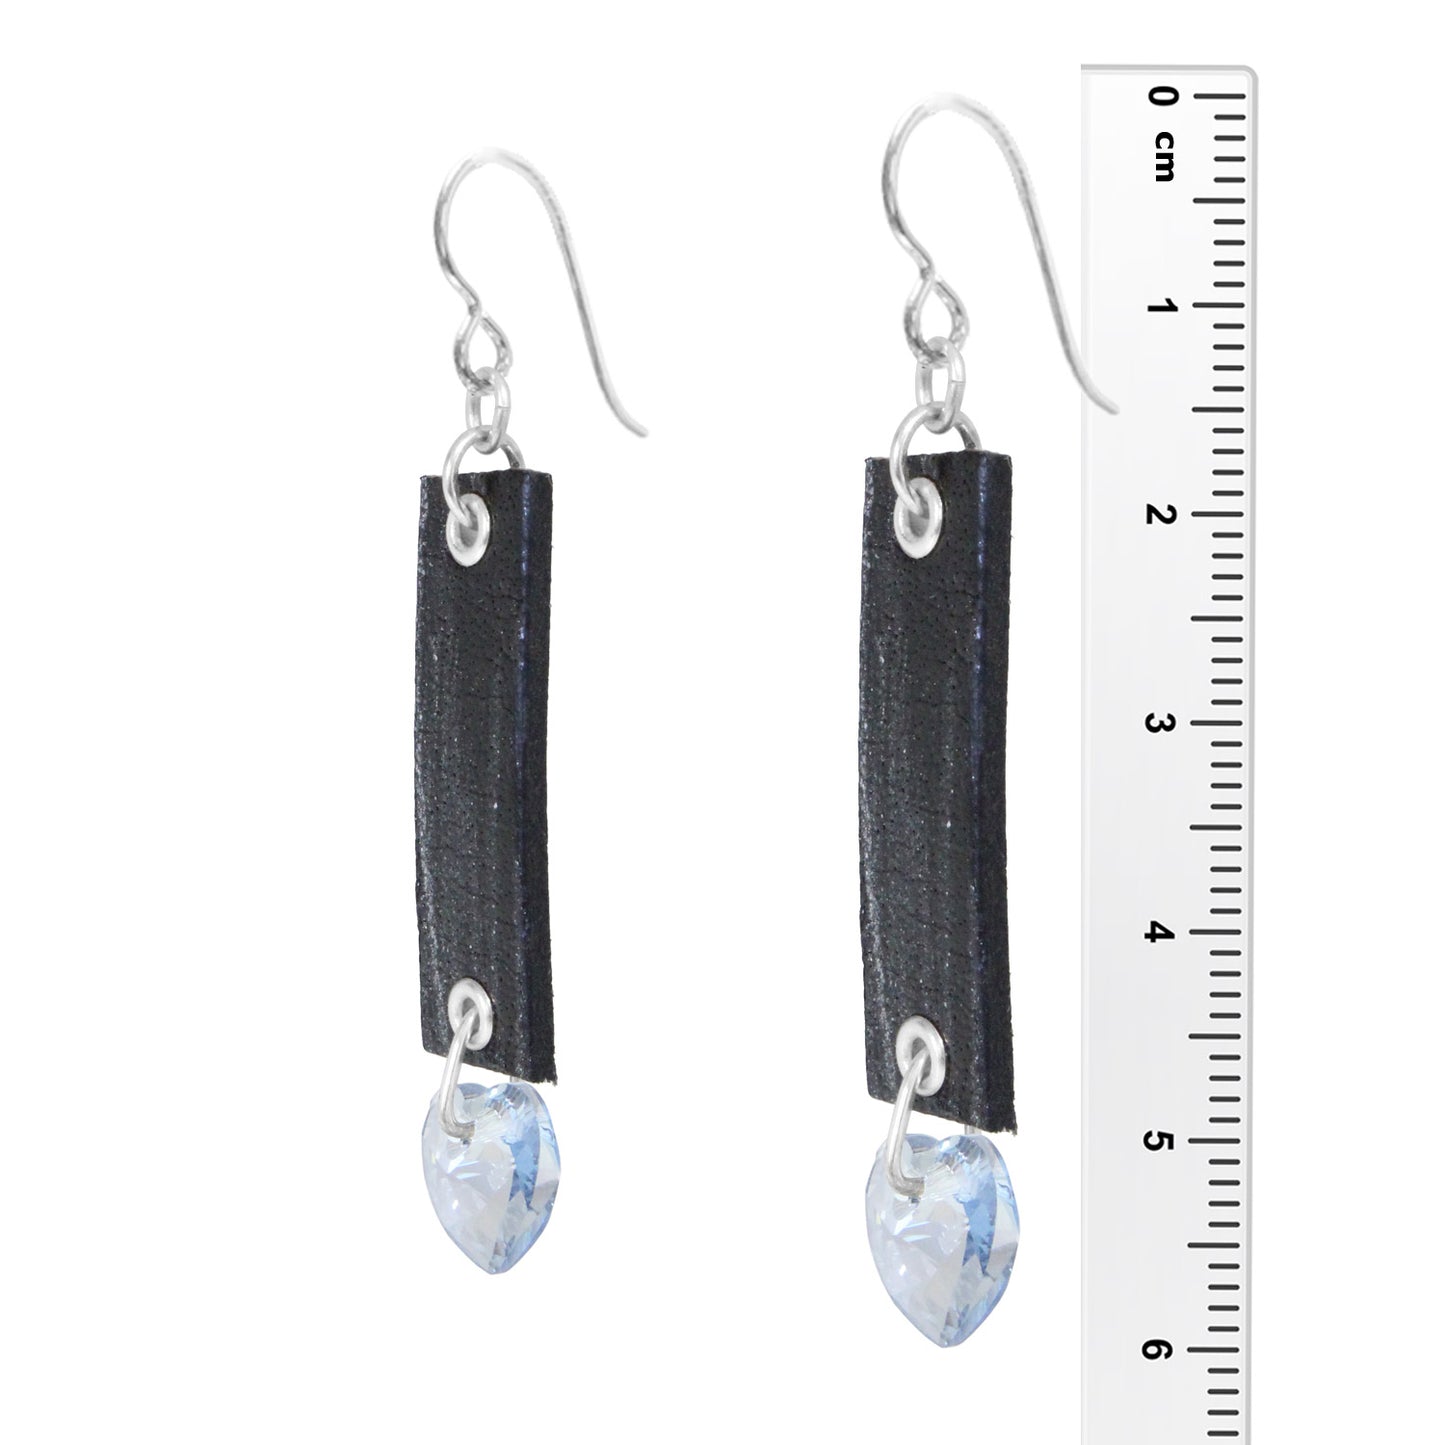 Winter LC Earrings / 60mm Length / crystal heart / sterling silver hook earwires